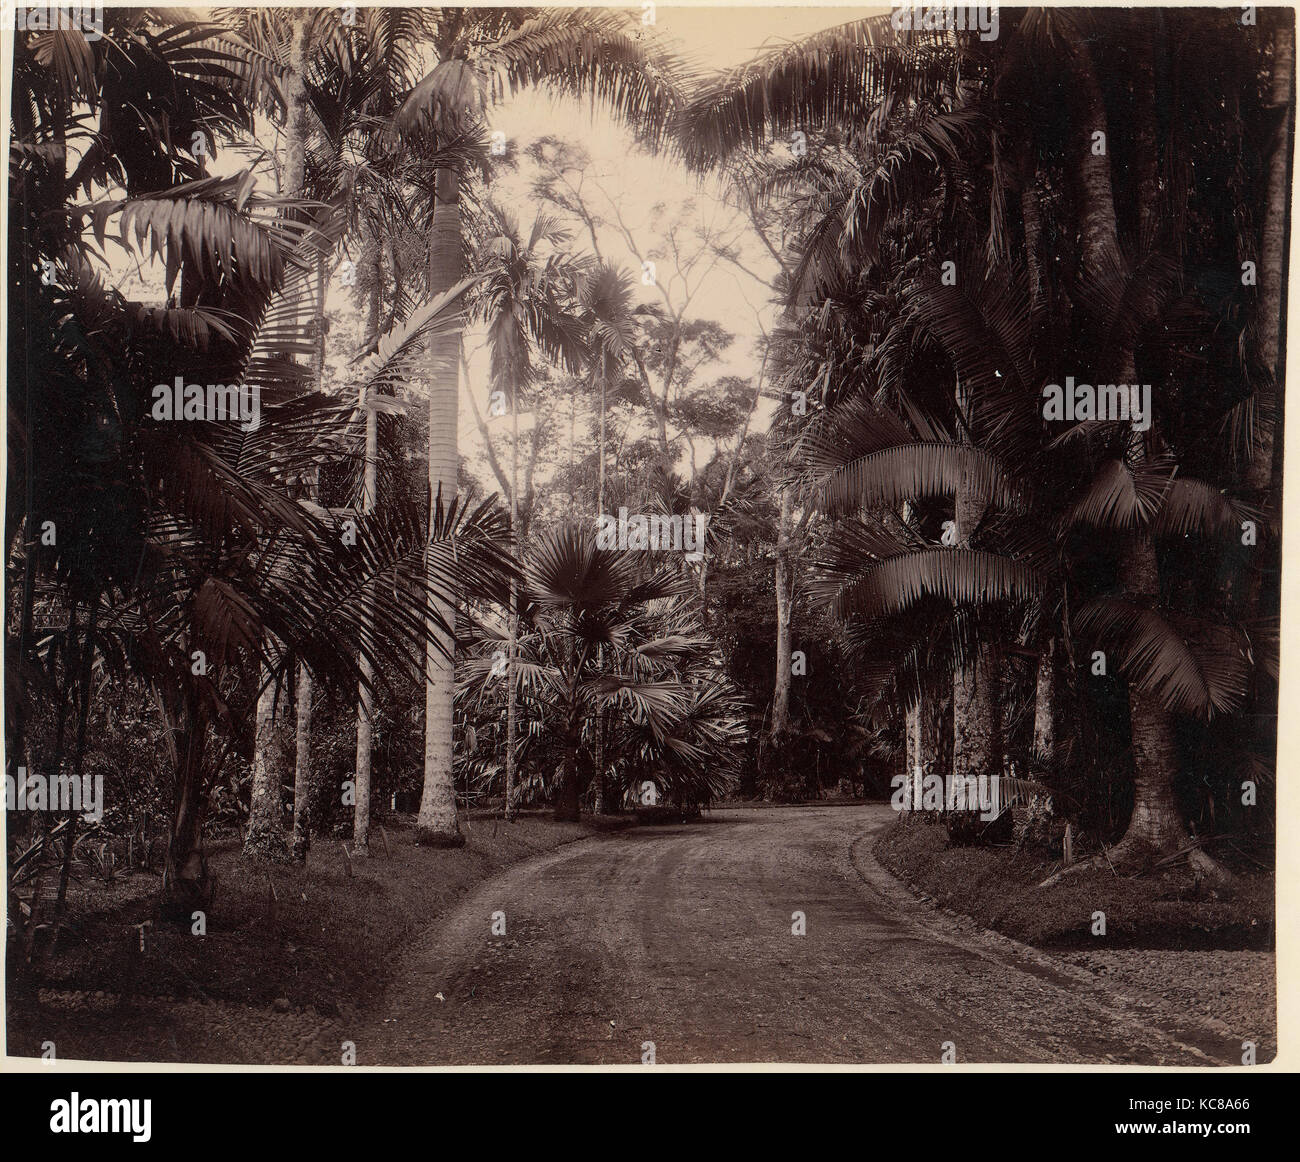 El Grupo Palm, Bvitenzorg, Java, 1860-70, albúmina imprimir plata de cristal negativo, 22,5 x 27,1 cm (8 7/8 x 10 11/16 Foto de stock